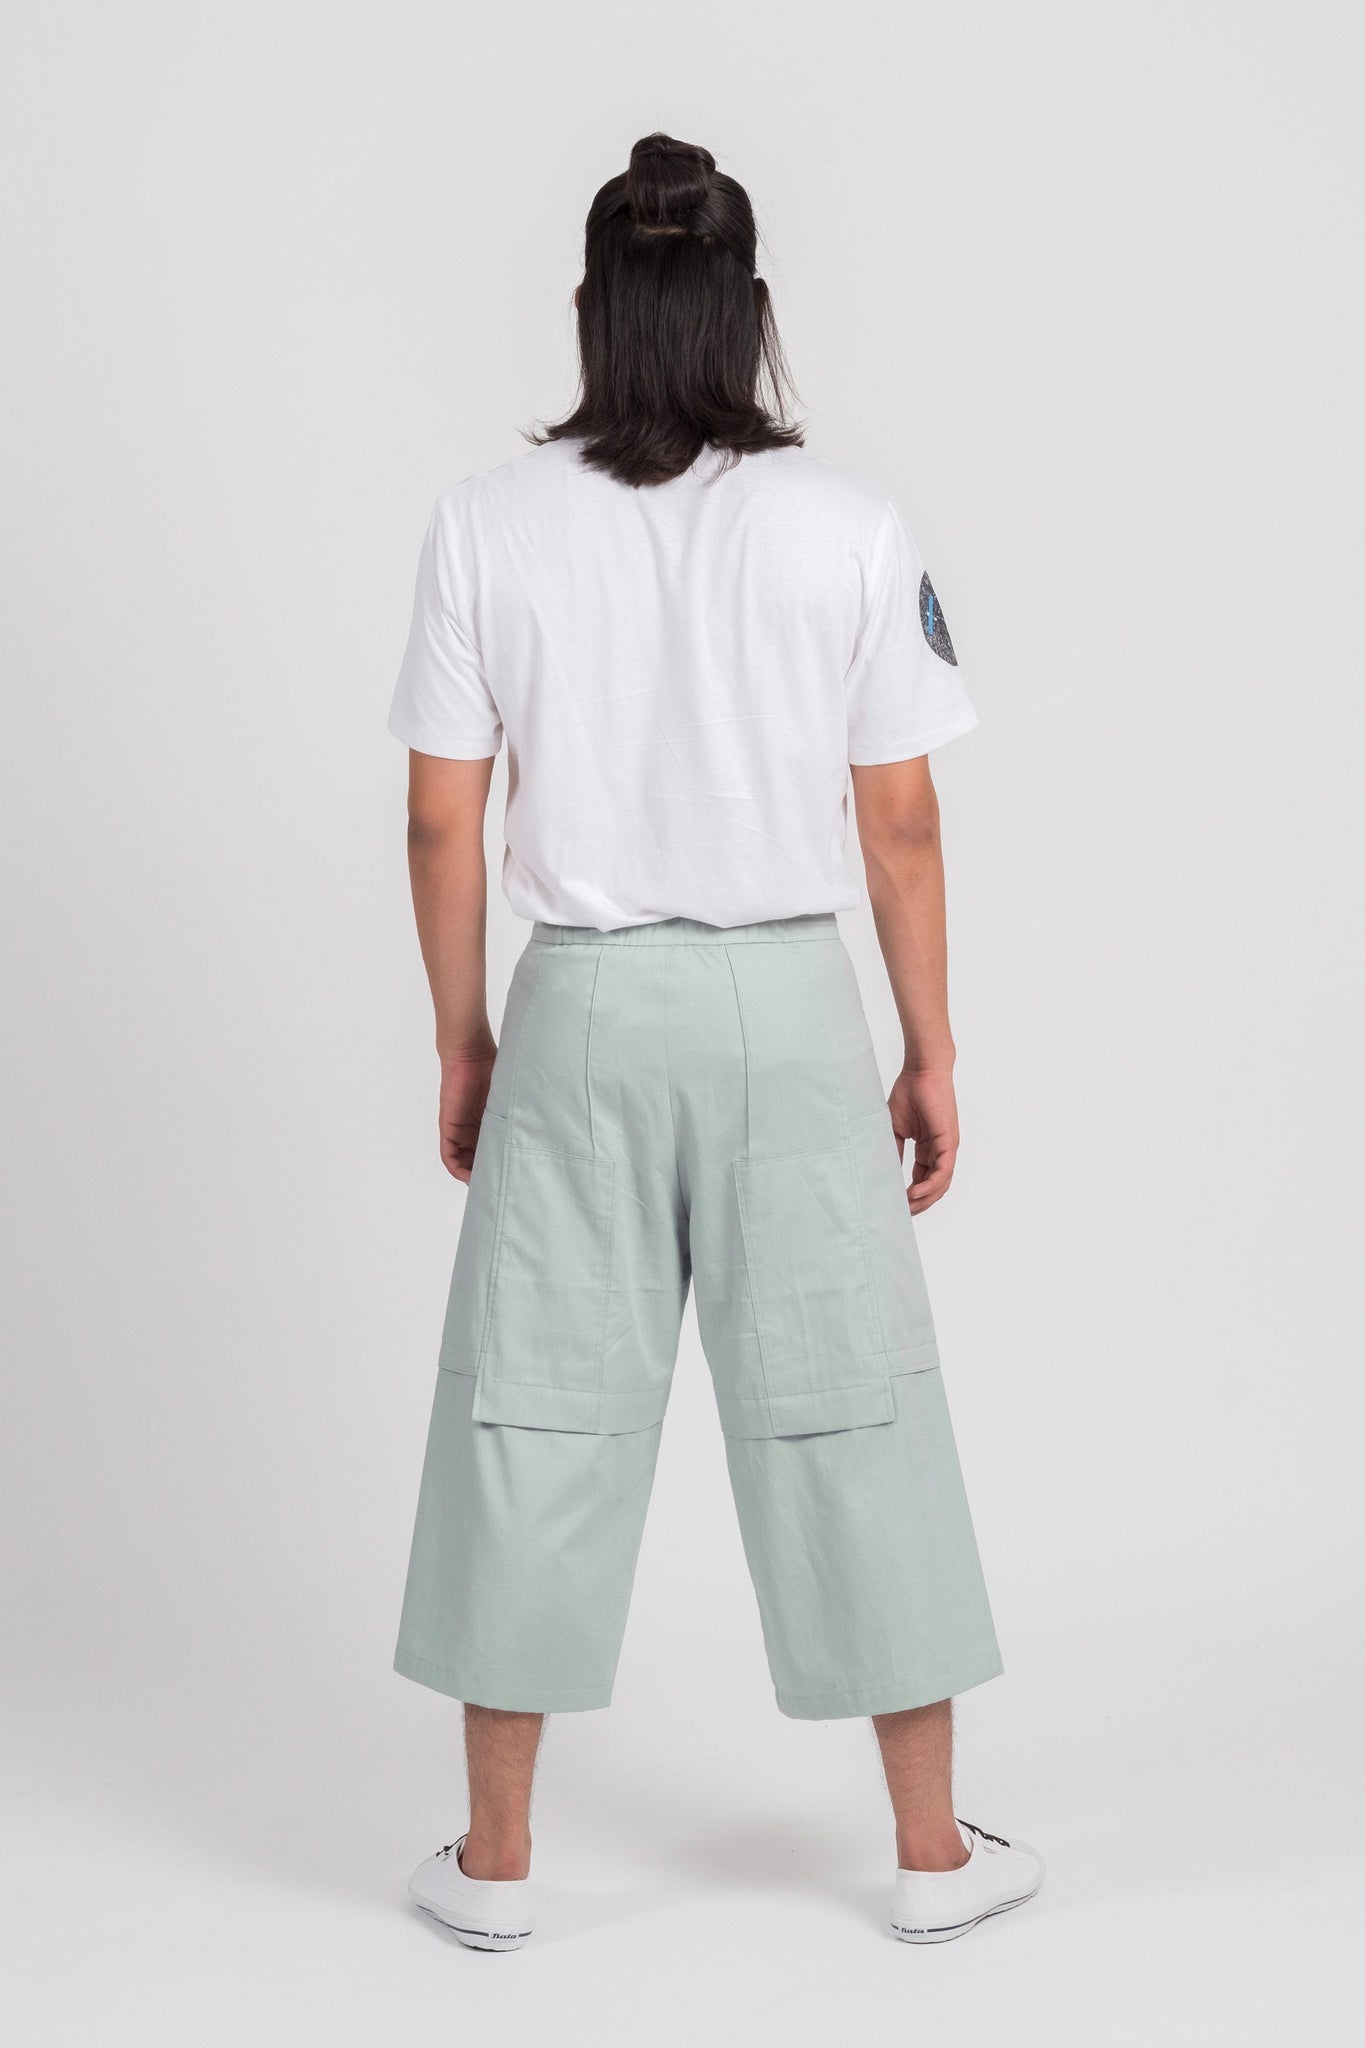 Orbit-Green Long Shorts with Cargo Pockets - BISKIT 